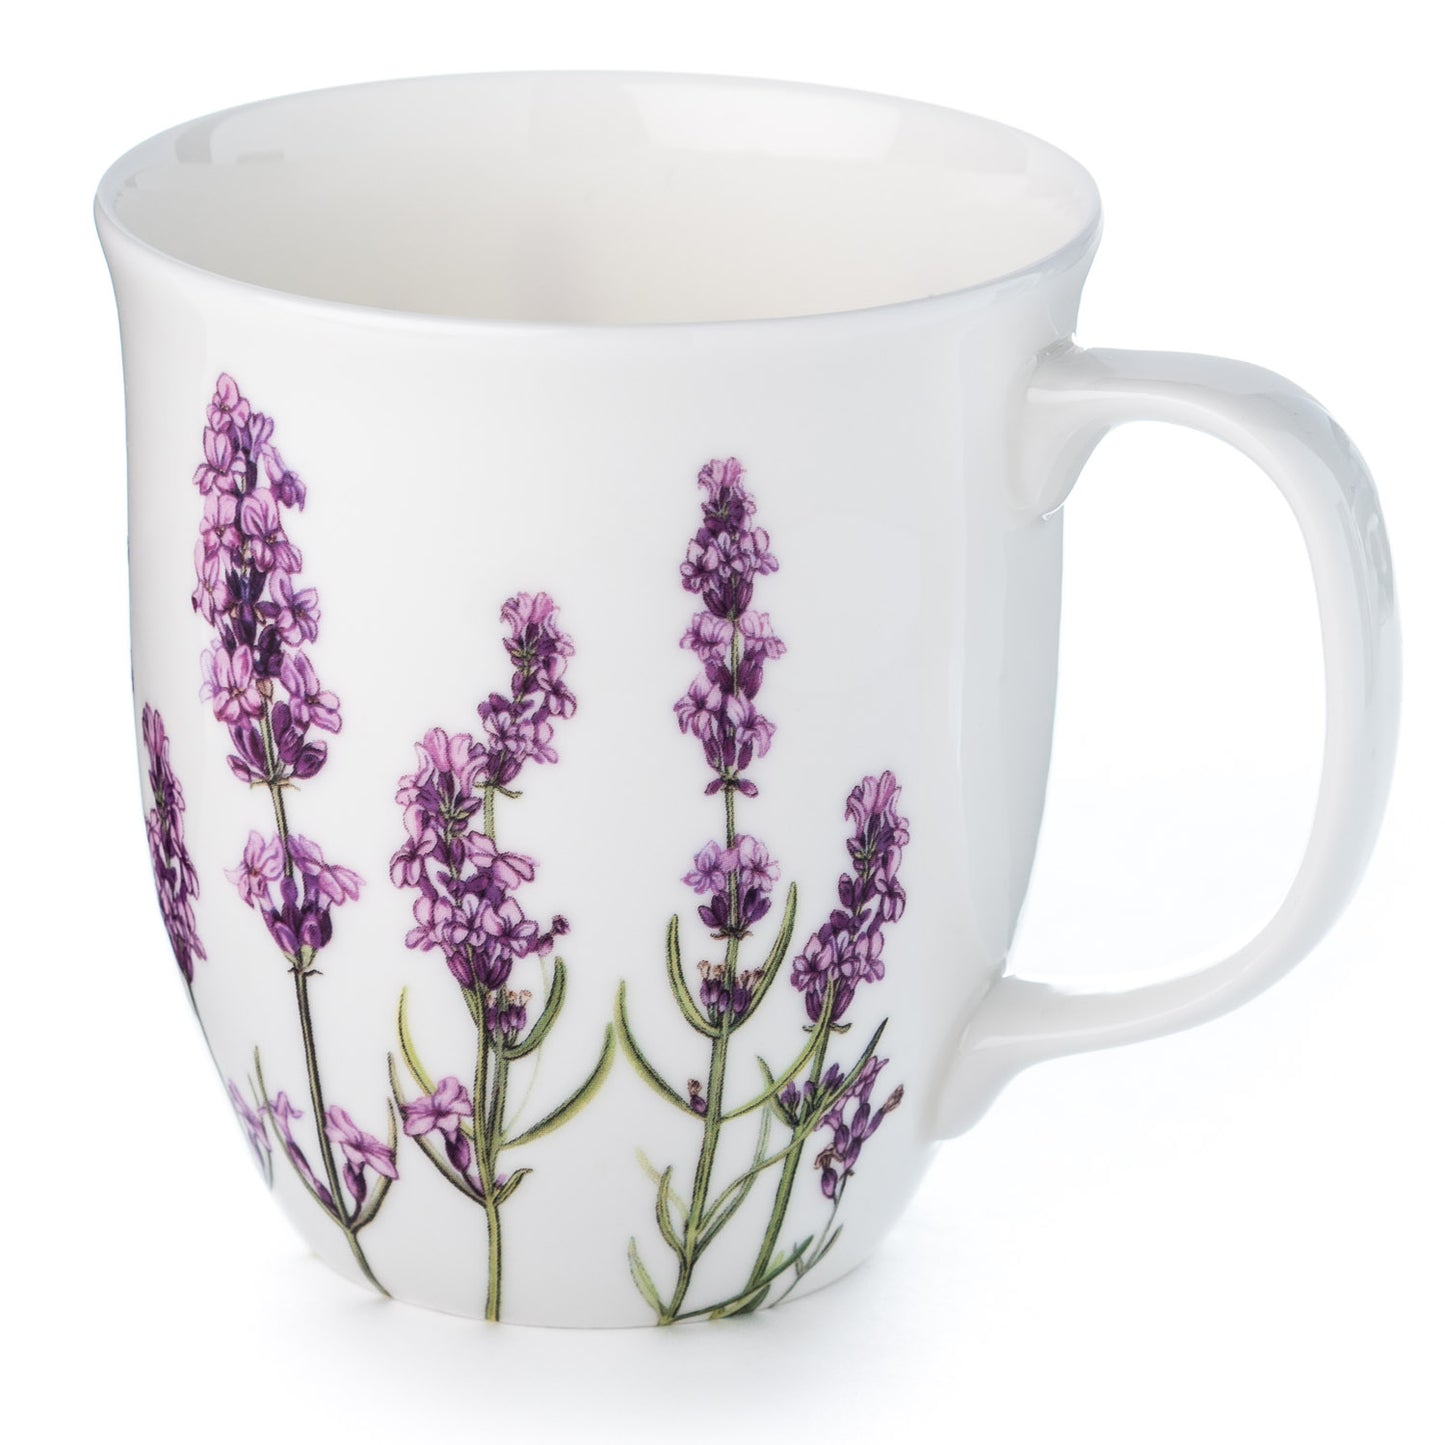 Garden Collection 'Lavender' Java Mug